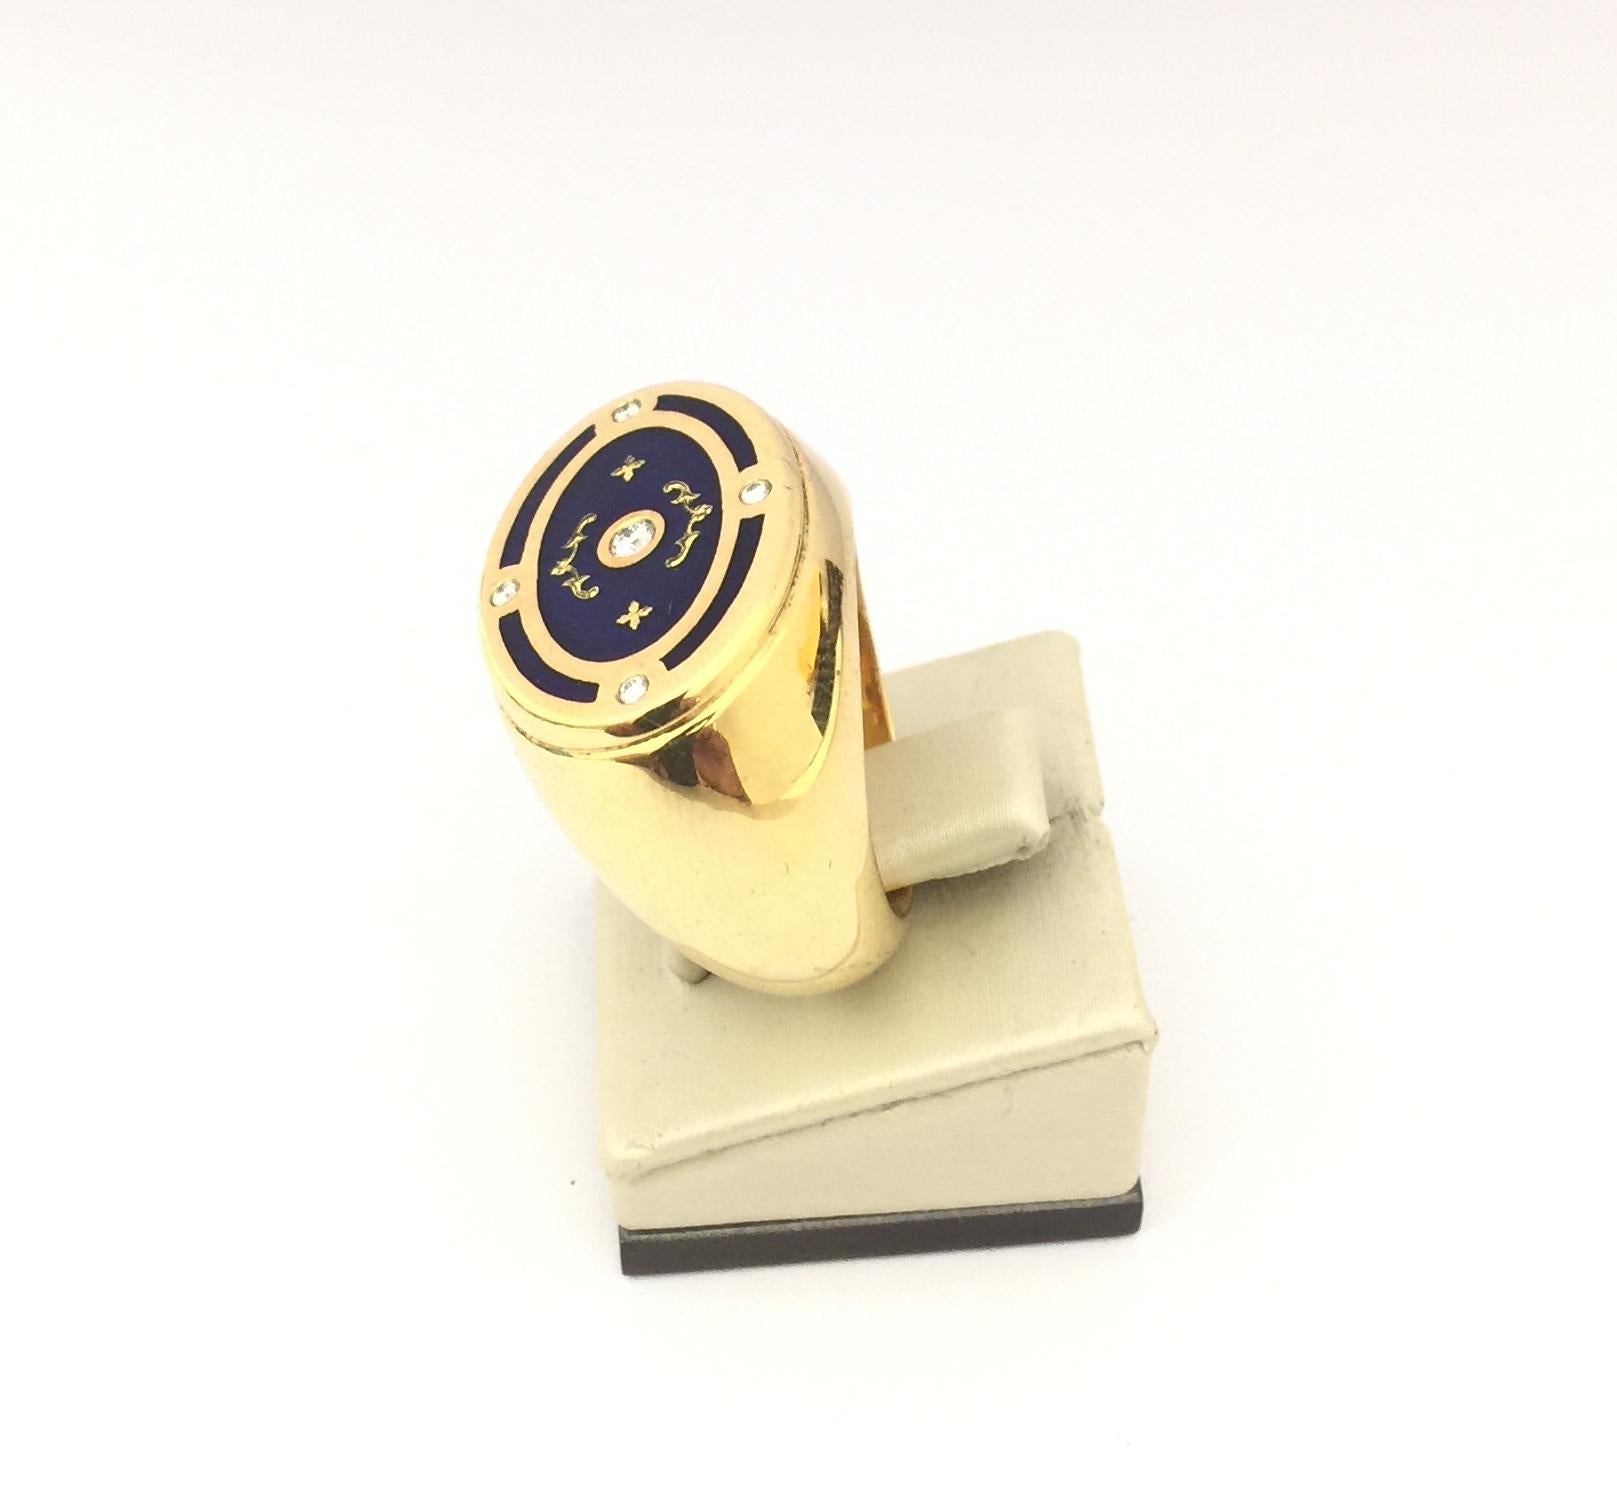 Faberge Blue Enamel and Diamonds Men's Ring.
18k Yellow Gold 
Blue Enamel
Diamonds 0.07
Size 6.5
F1887BL